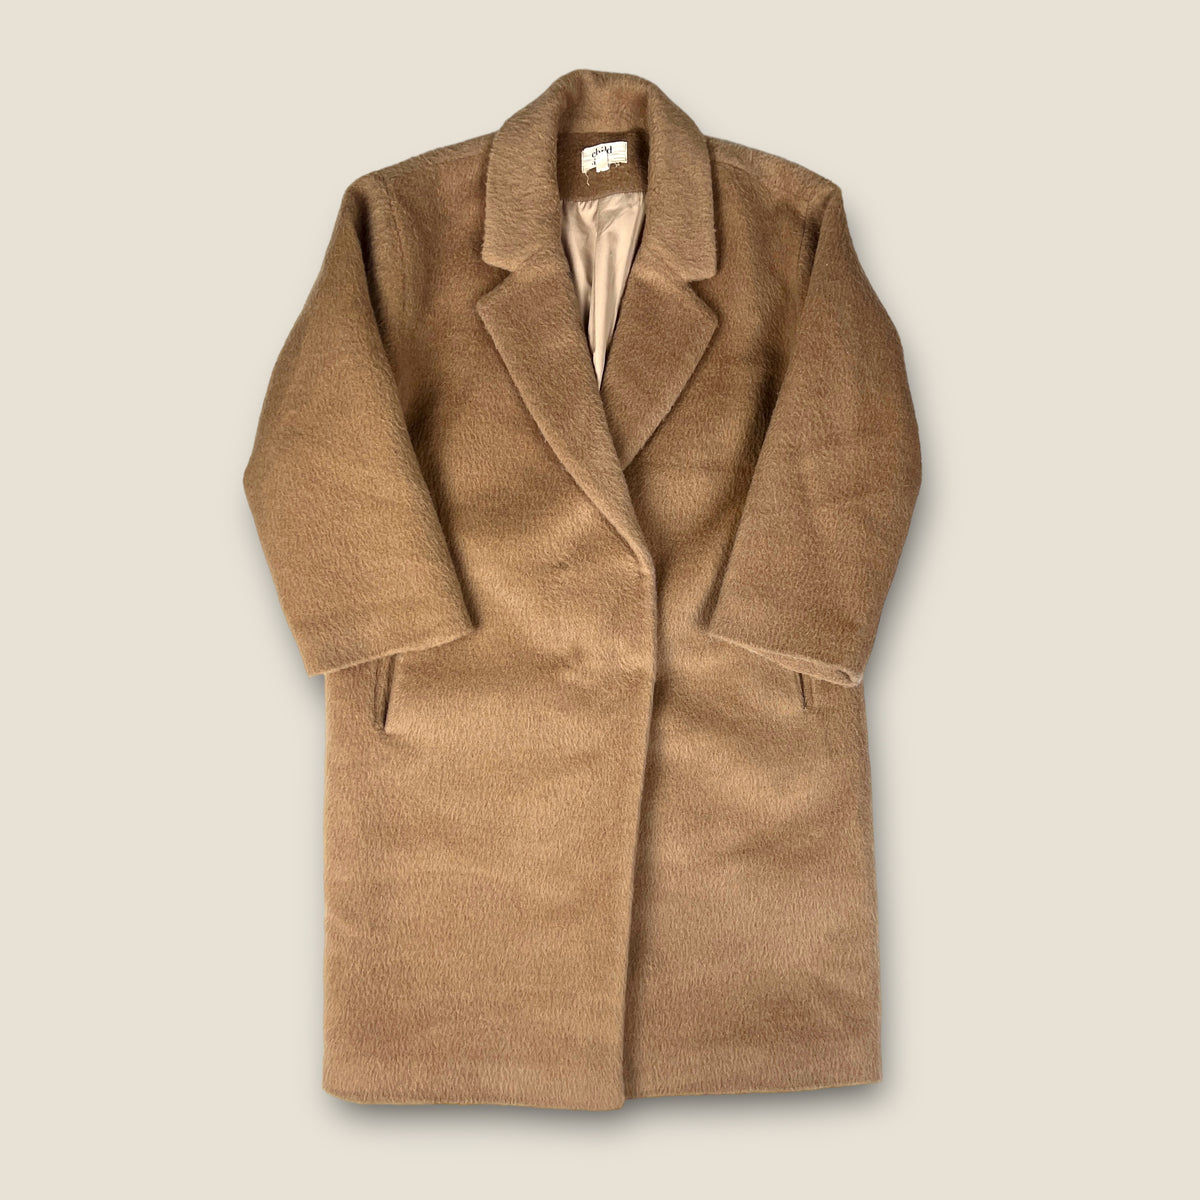 Child-ish Wool Overcoat size 8 years